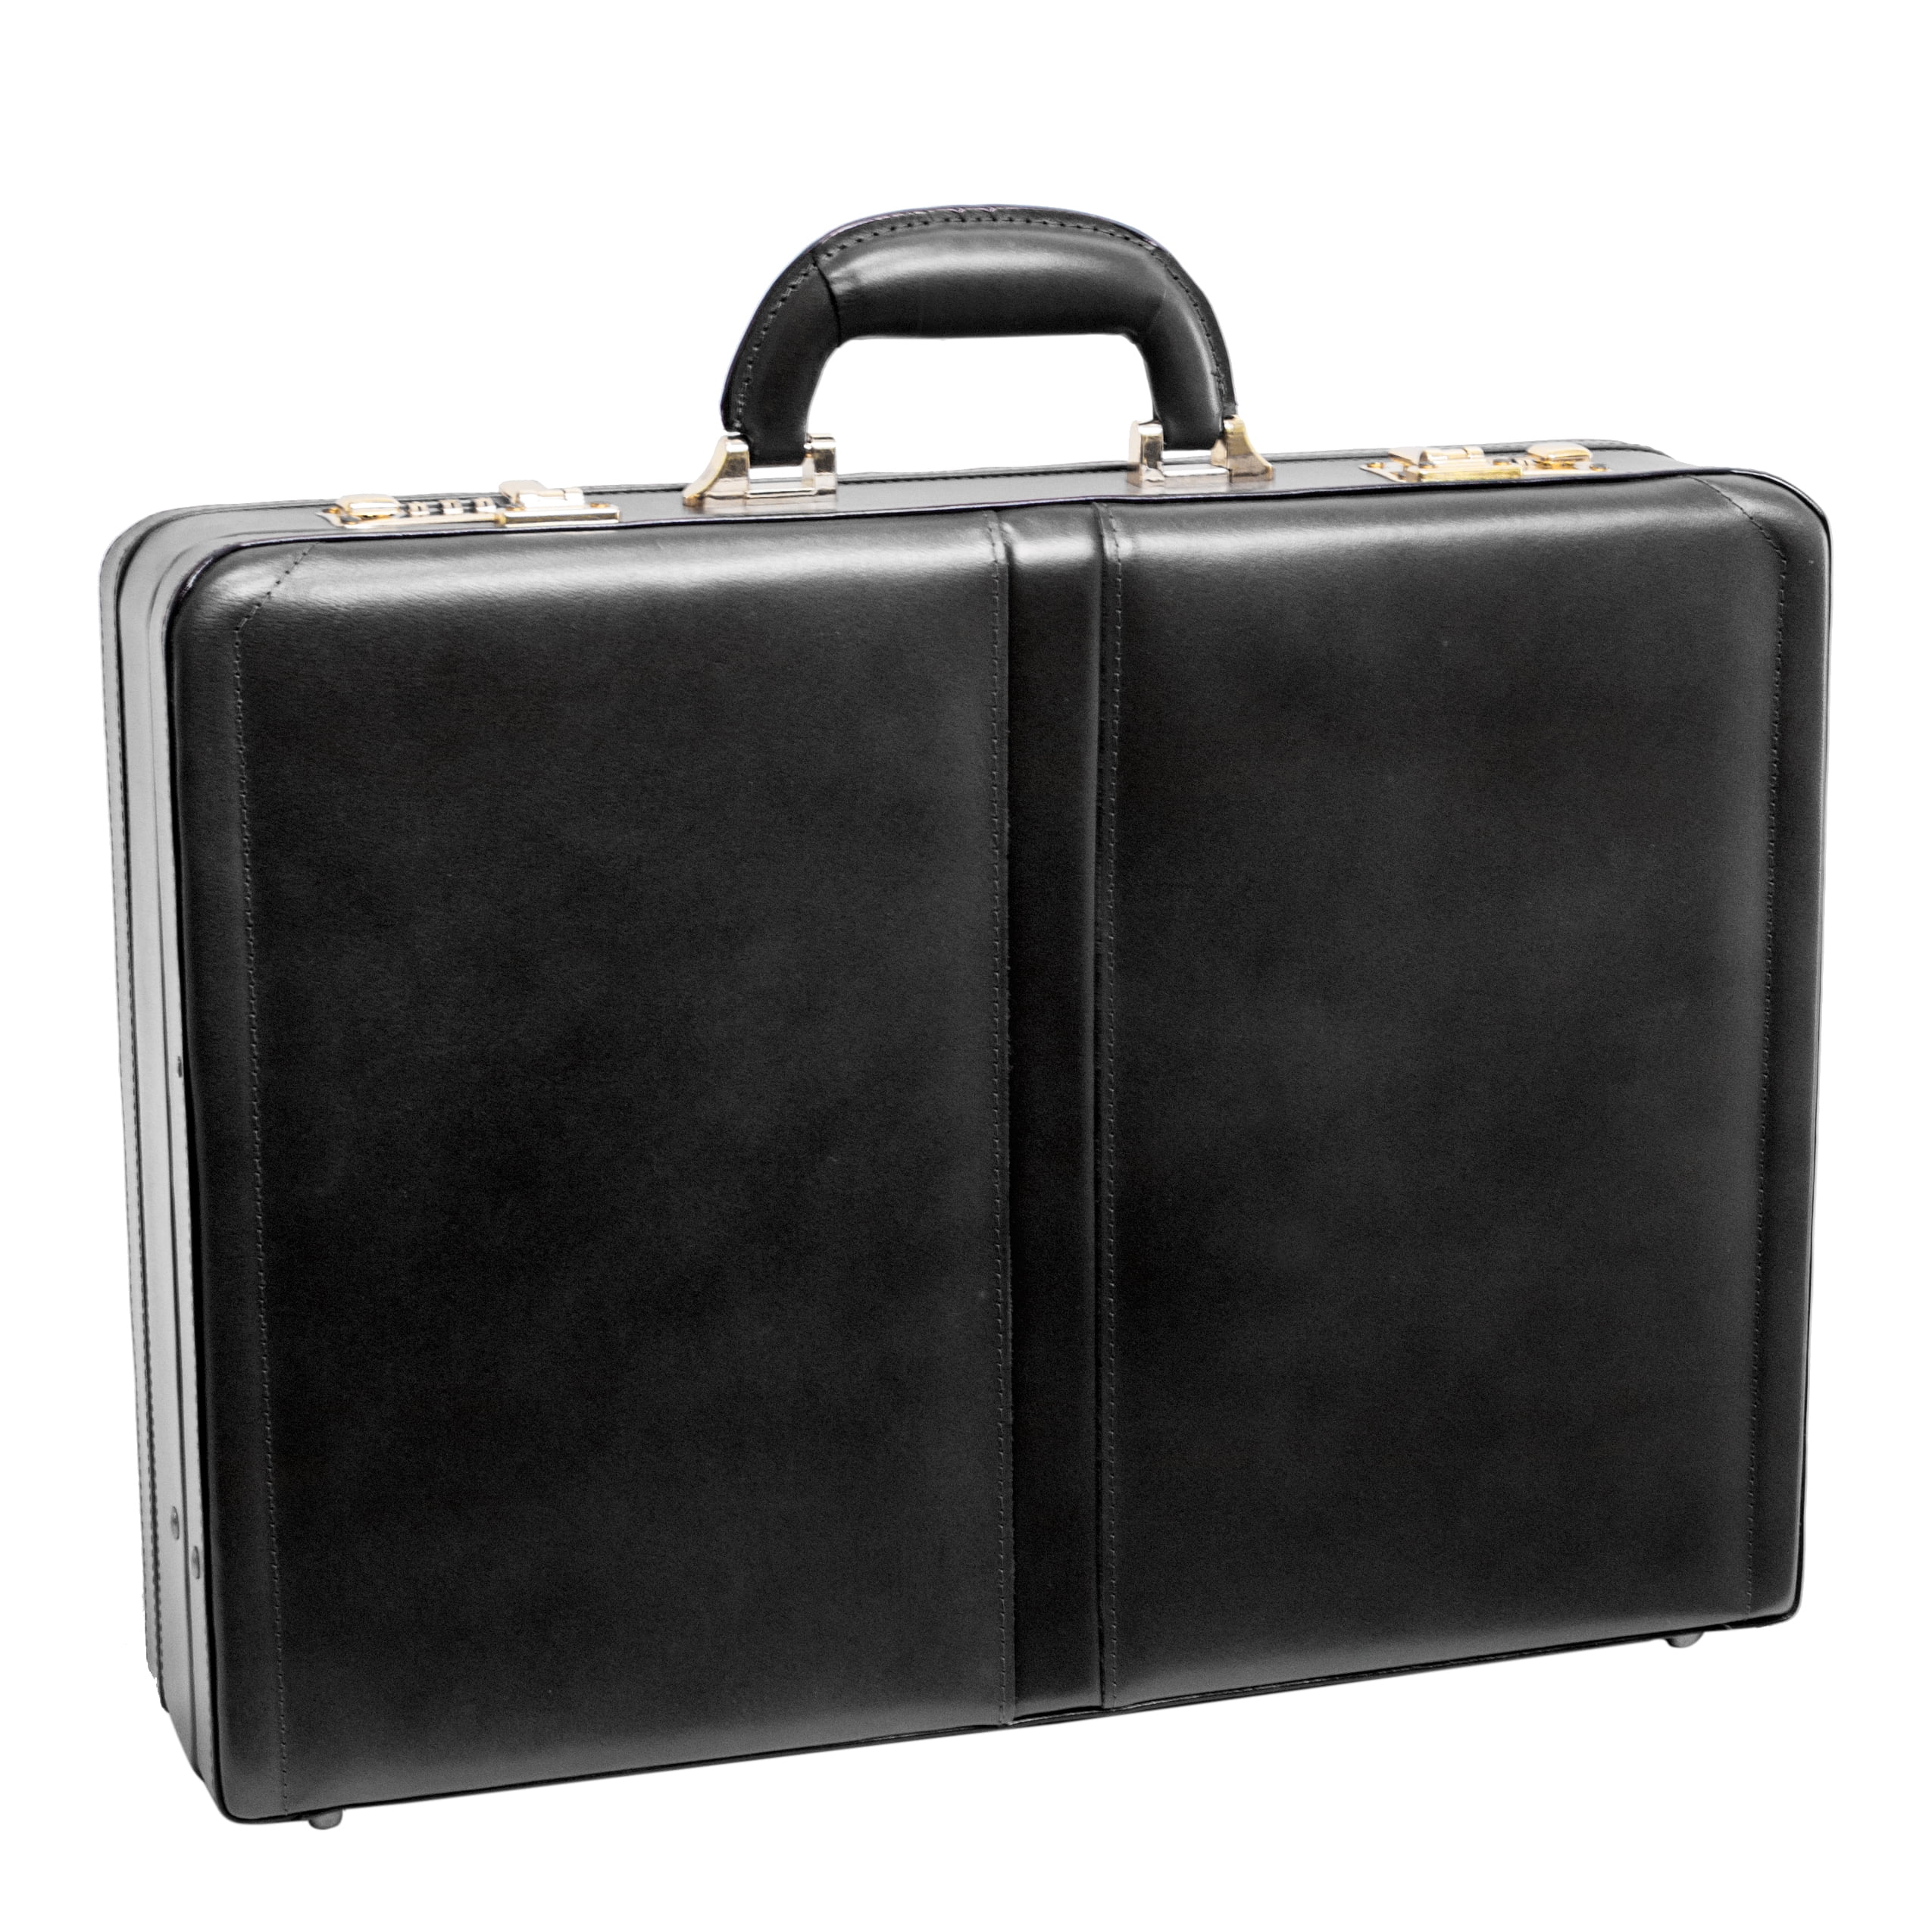 Quality Unisex Executive Faux Leather Business Briefcase Attache/Travel Case 